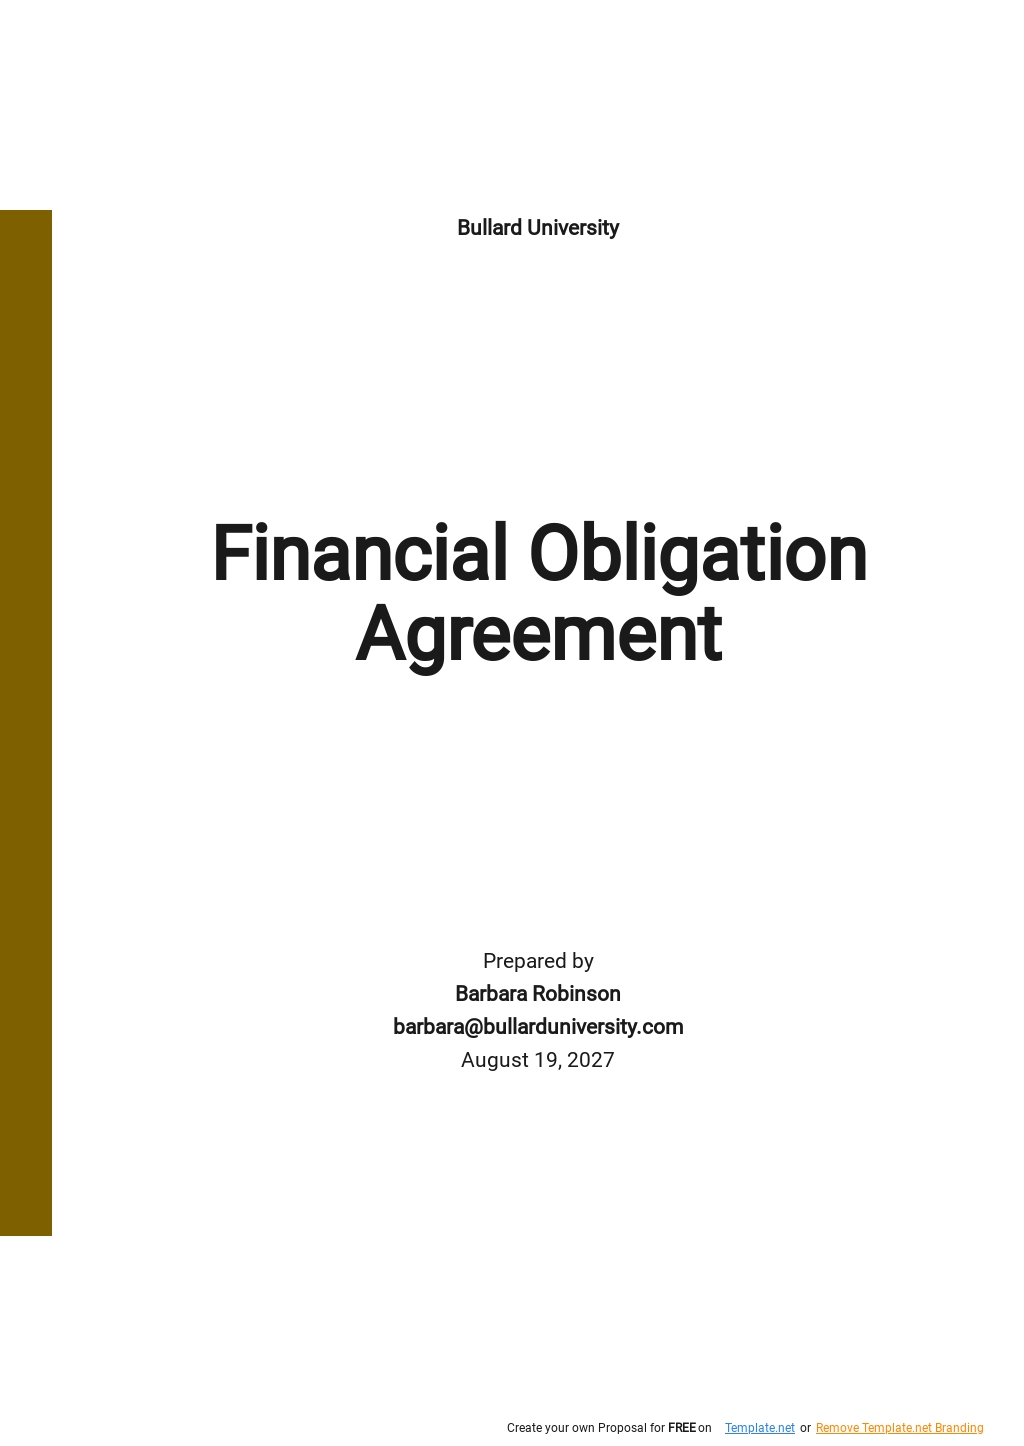 Financial Obligation Agreement Template.jpe